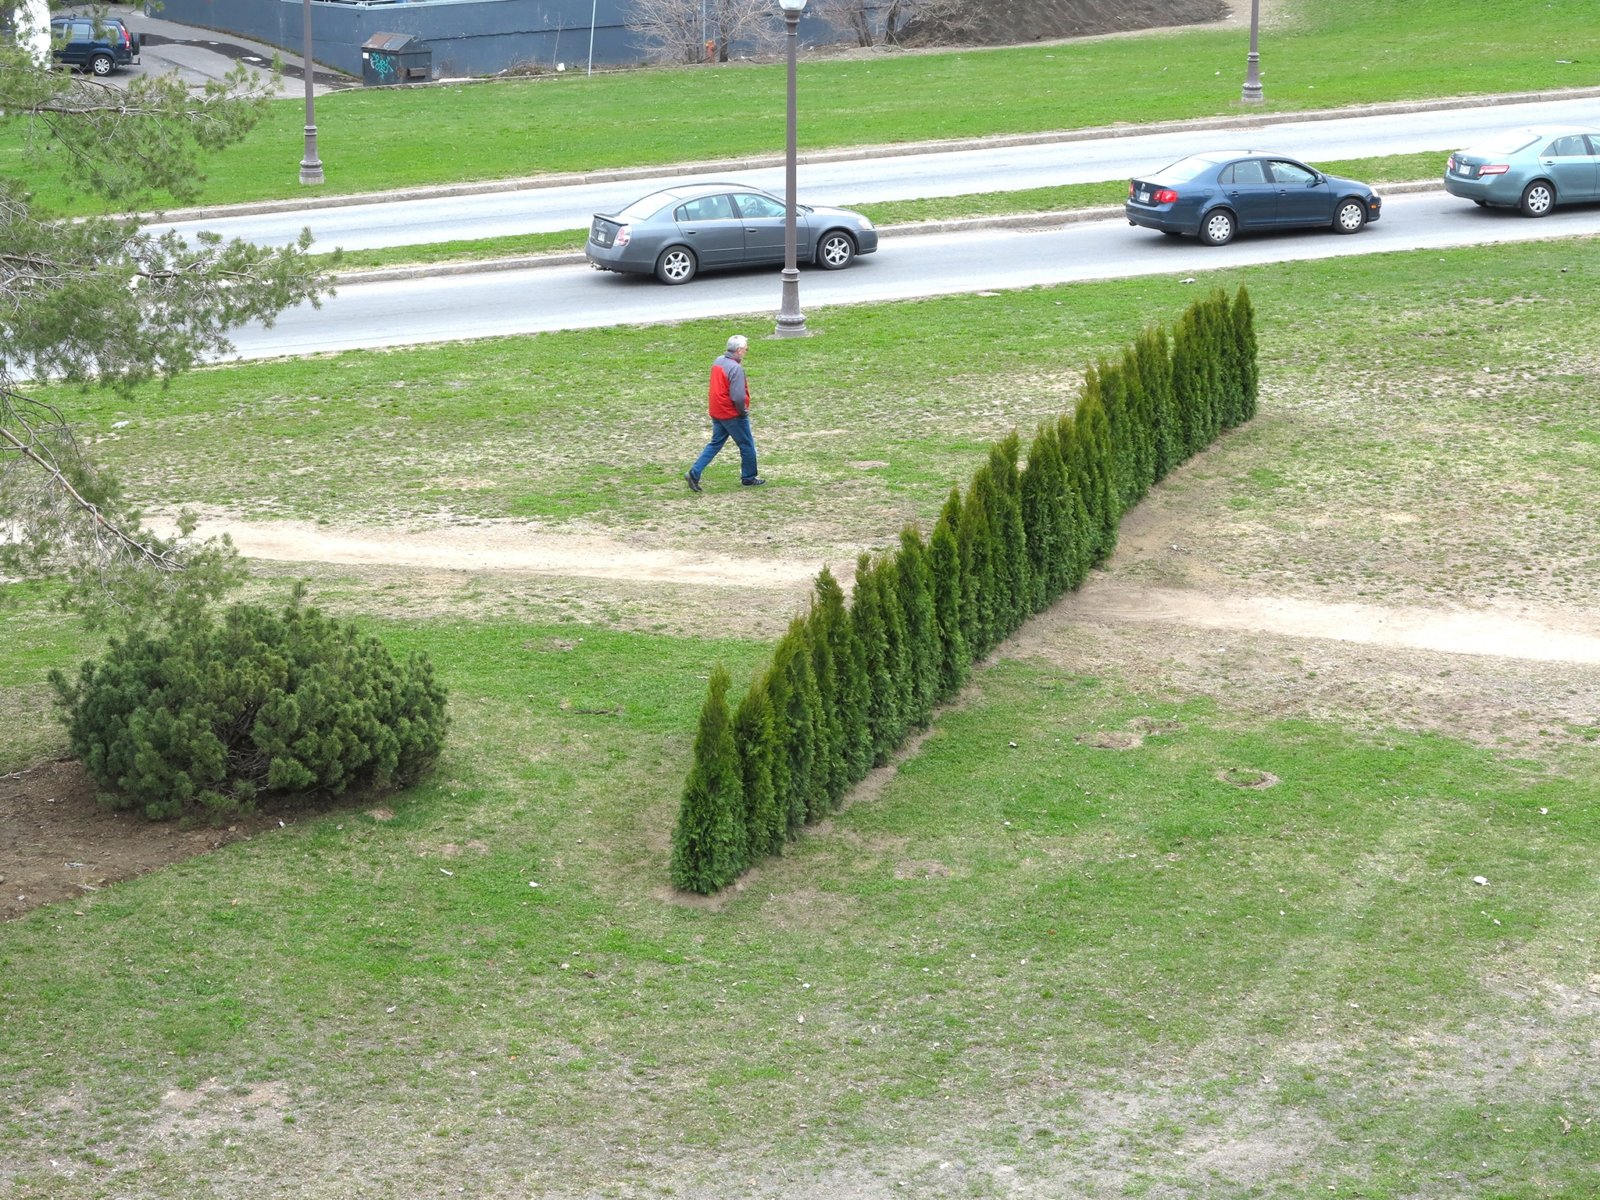 Abbas Akhavan, Variations on Untitled Garden, 2014, emerald cedar trees, dimensions variable. Installation view, Manif d’art 7, Quebec City, Canada, 2014